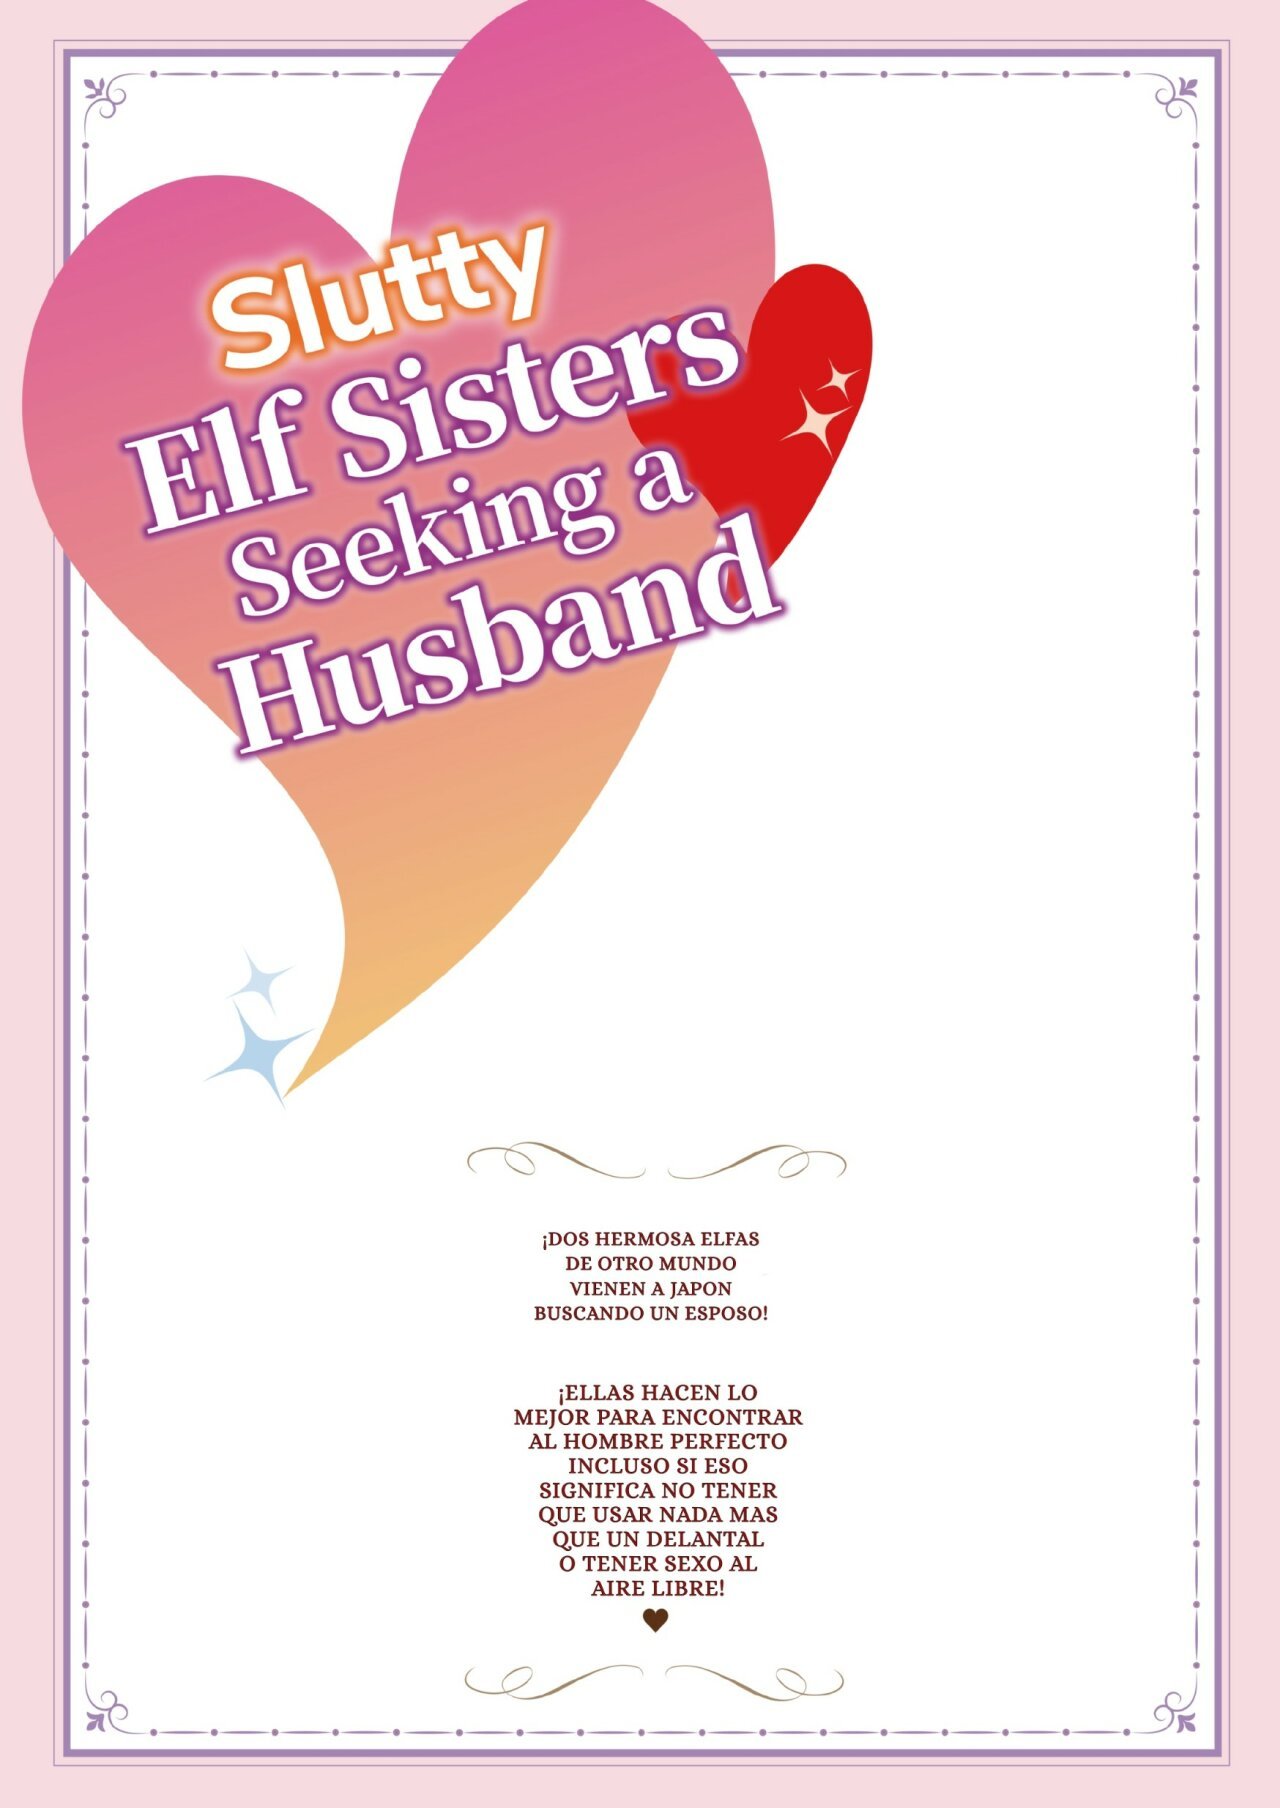 Slutty Elf Sisters Seeking a Husband 1 - 34